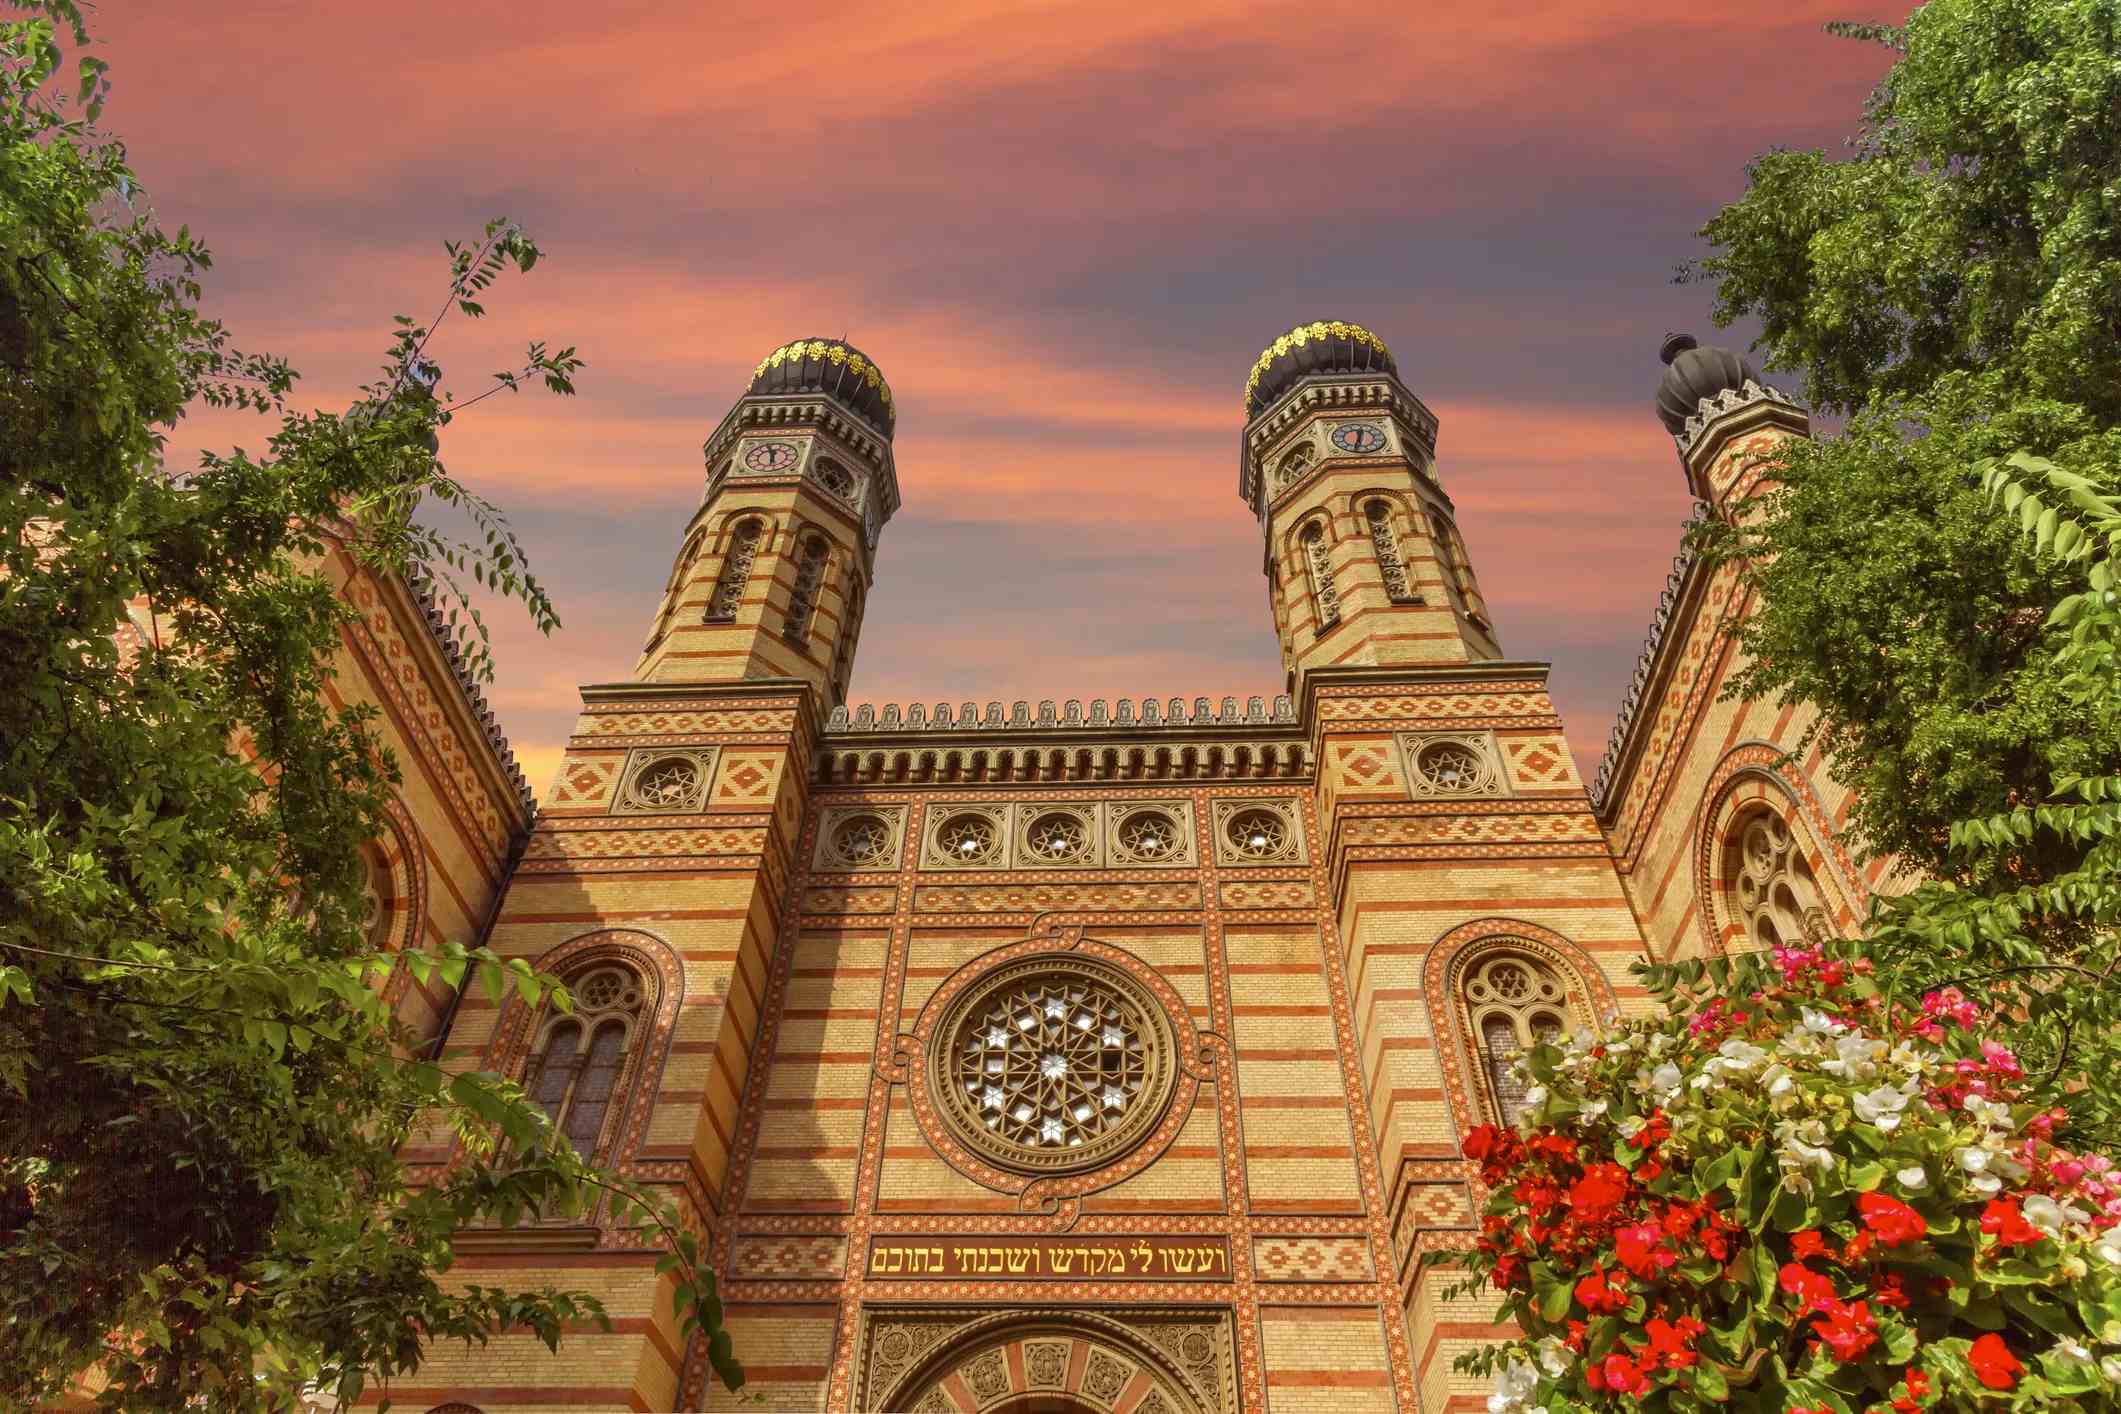 Gran Sinagoga de Budapest image